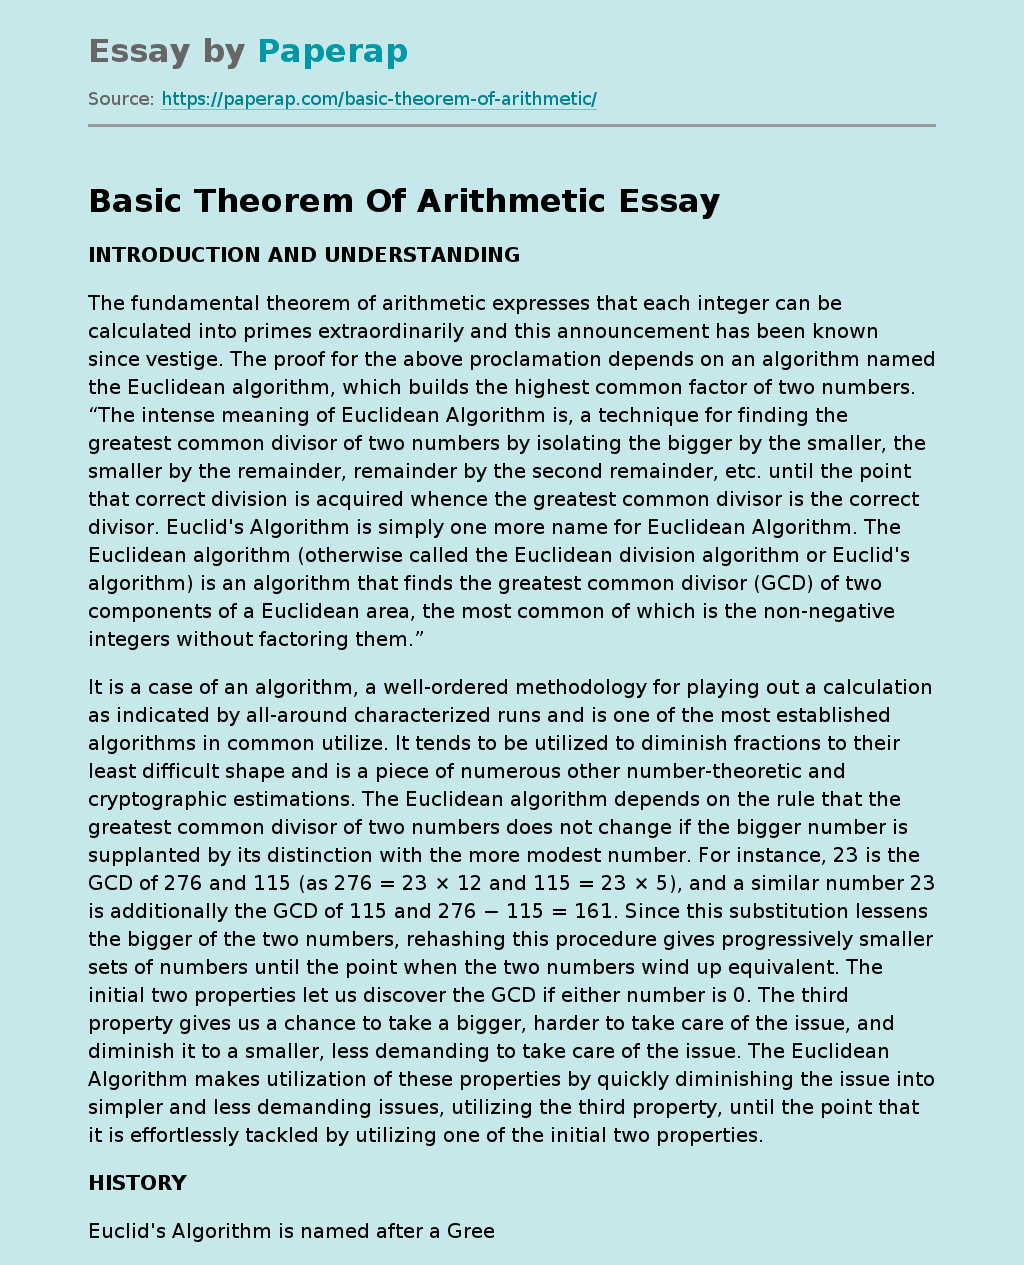 Basic Theorem Of Arithmetic